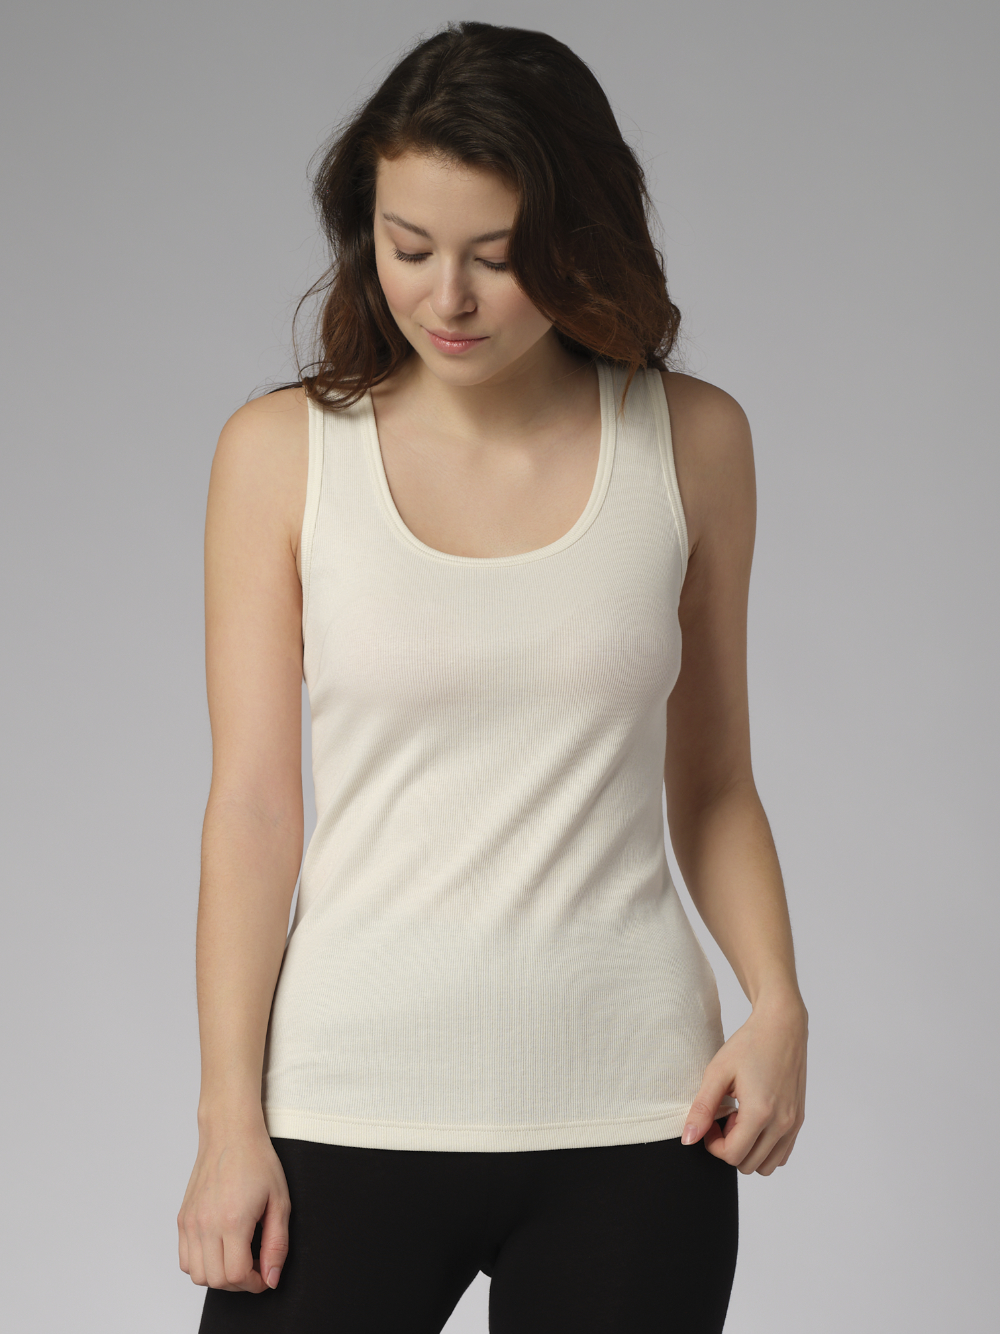 Comazo Damen Feinripp Shirt ohne Arm Farbe Offwhite